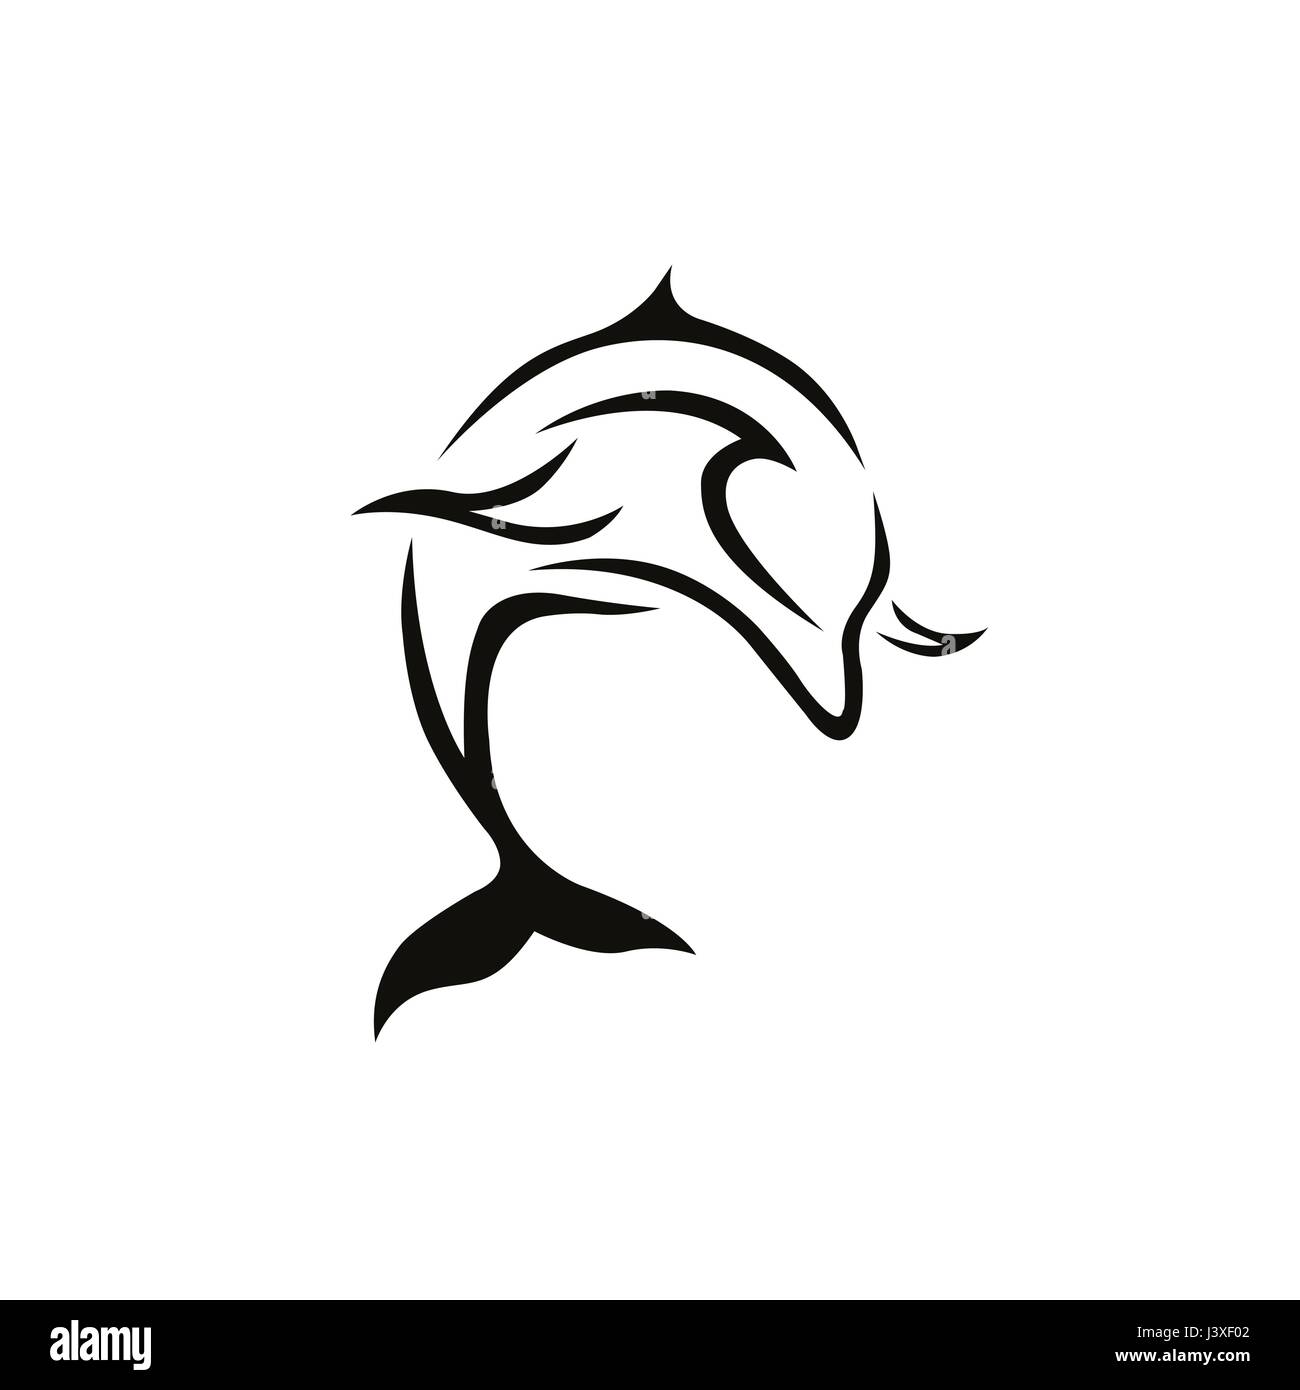 Cute dolphin tattoo design stock illustration Illustration of life   30892200